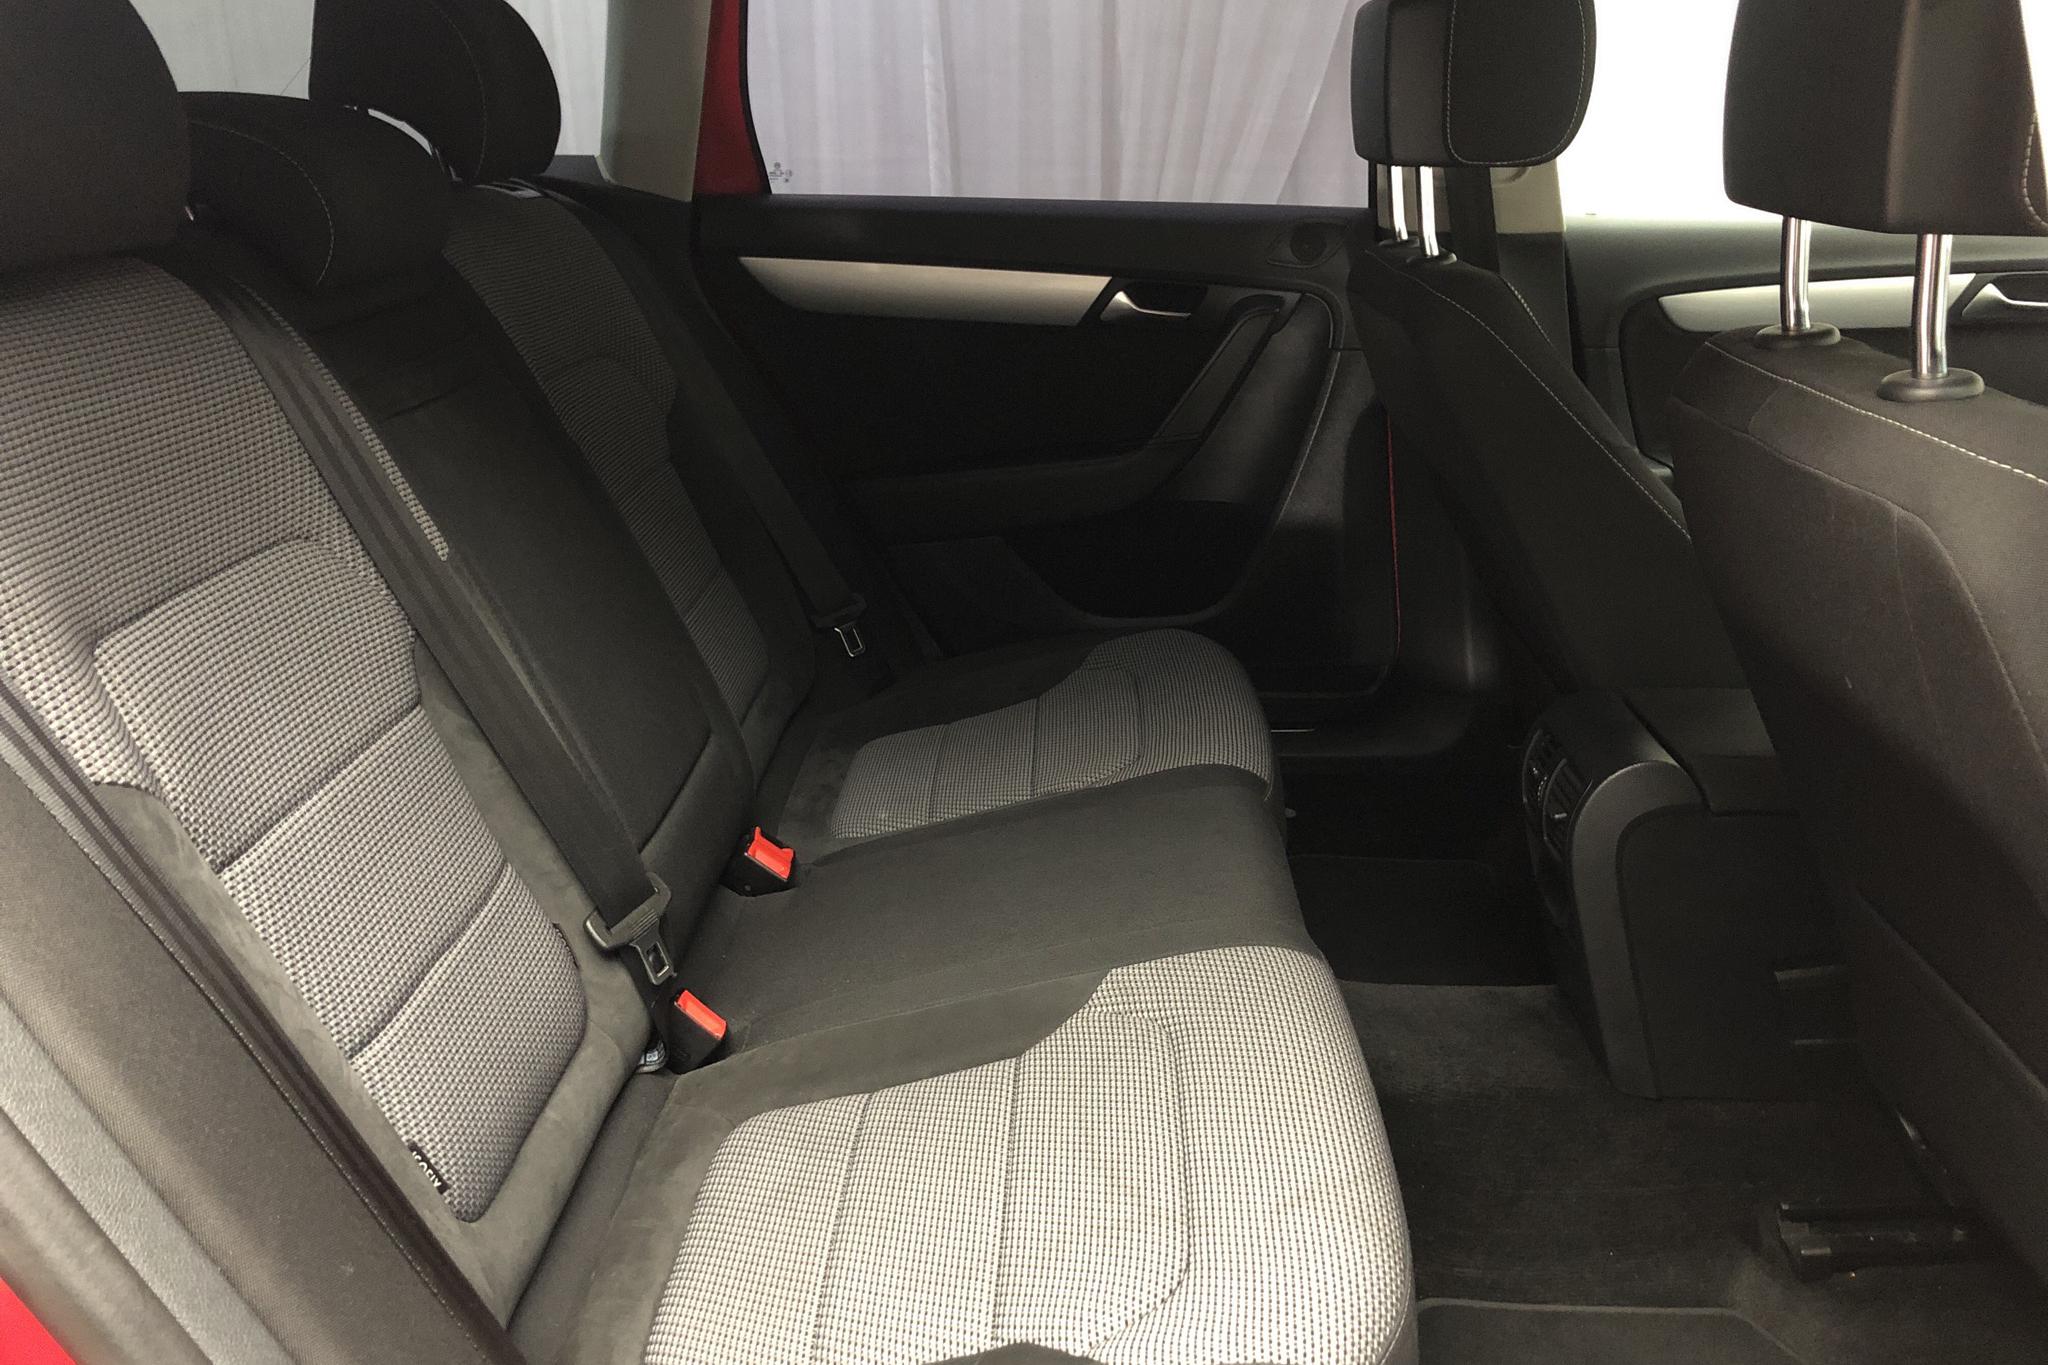 VW Passat Alltrack 2.0 TFSI 4Motion (211hk) - 171 370 km - Automatic - red - 2013